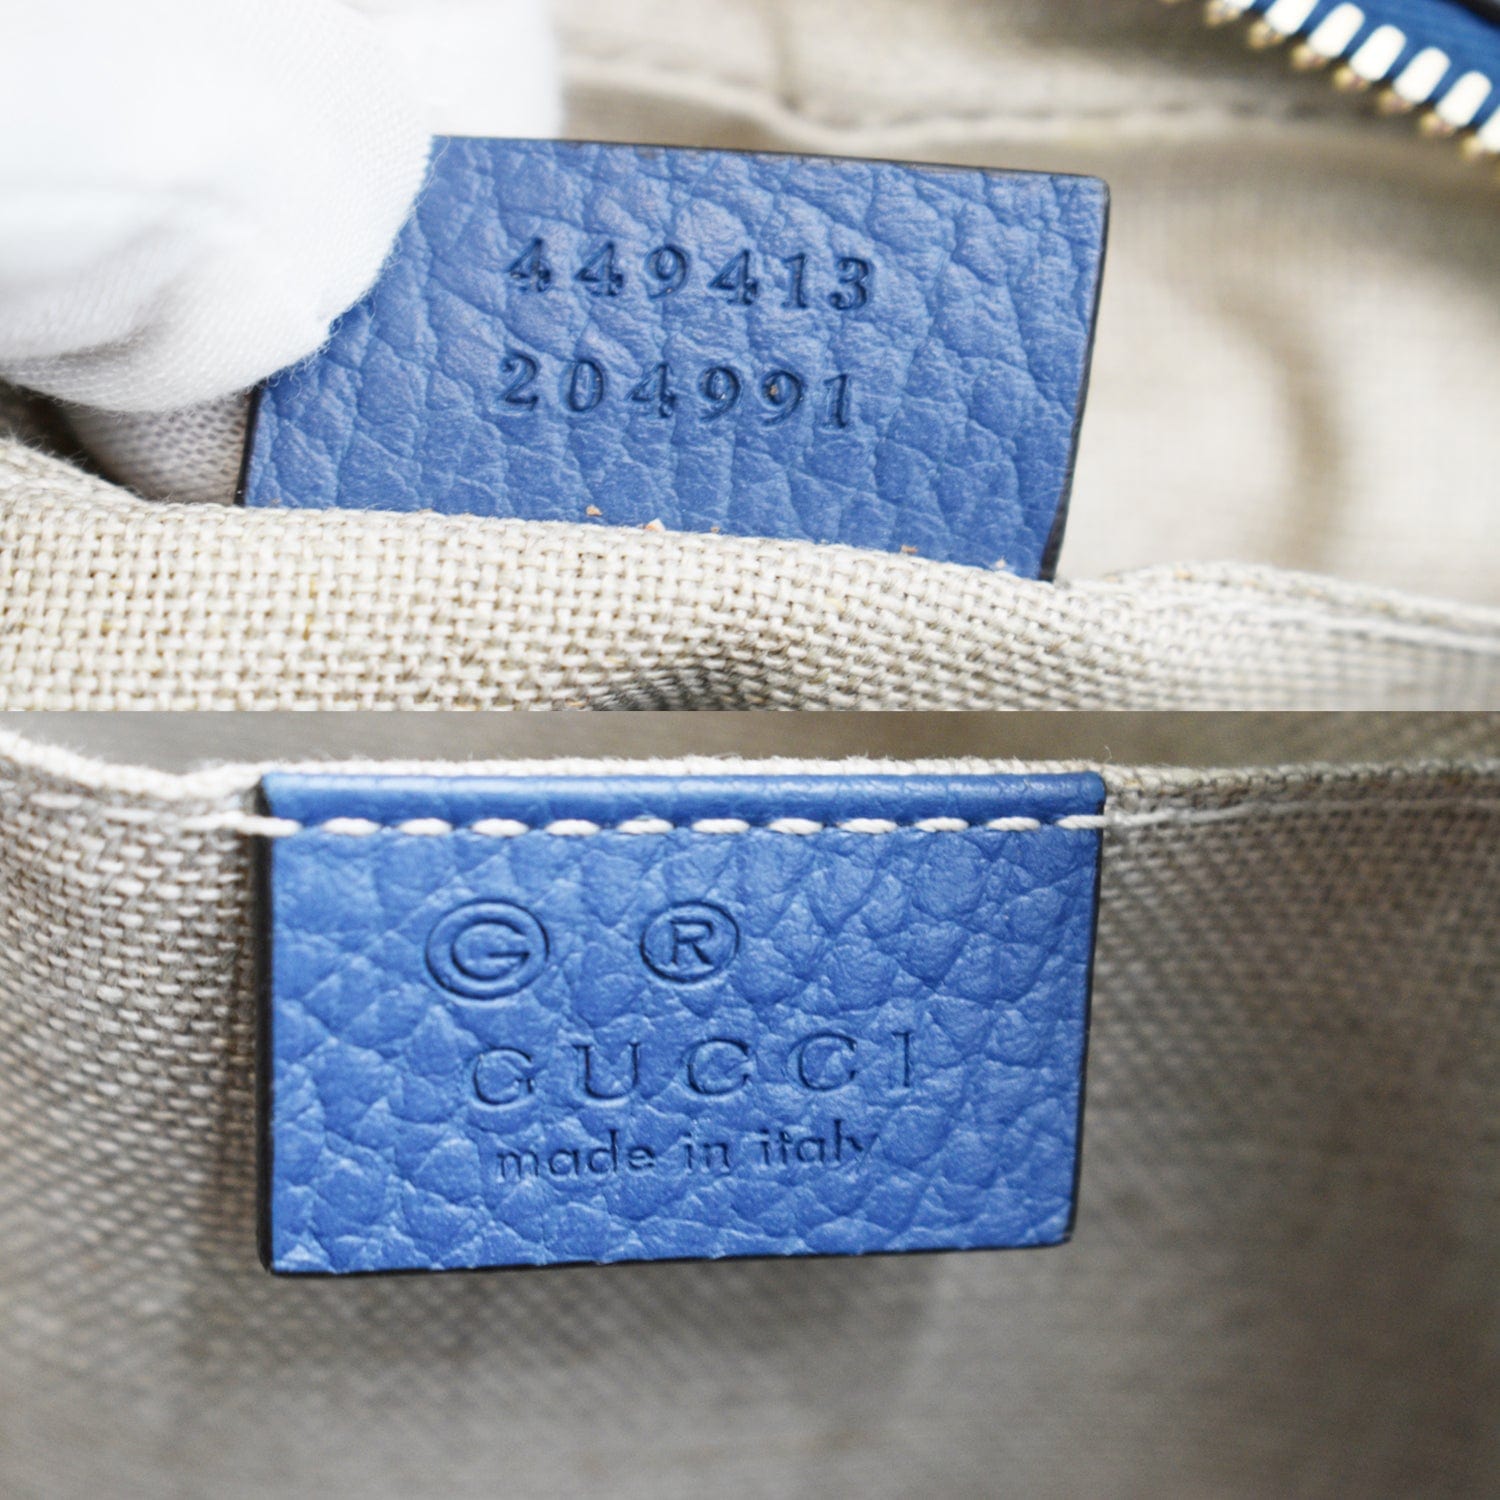 New Gucci Bree Ivory Original Canvas GG Logo Cross Body Bag 449413 